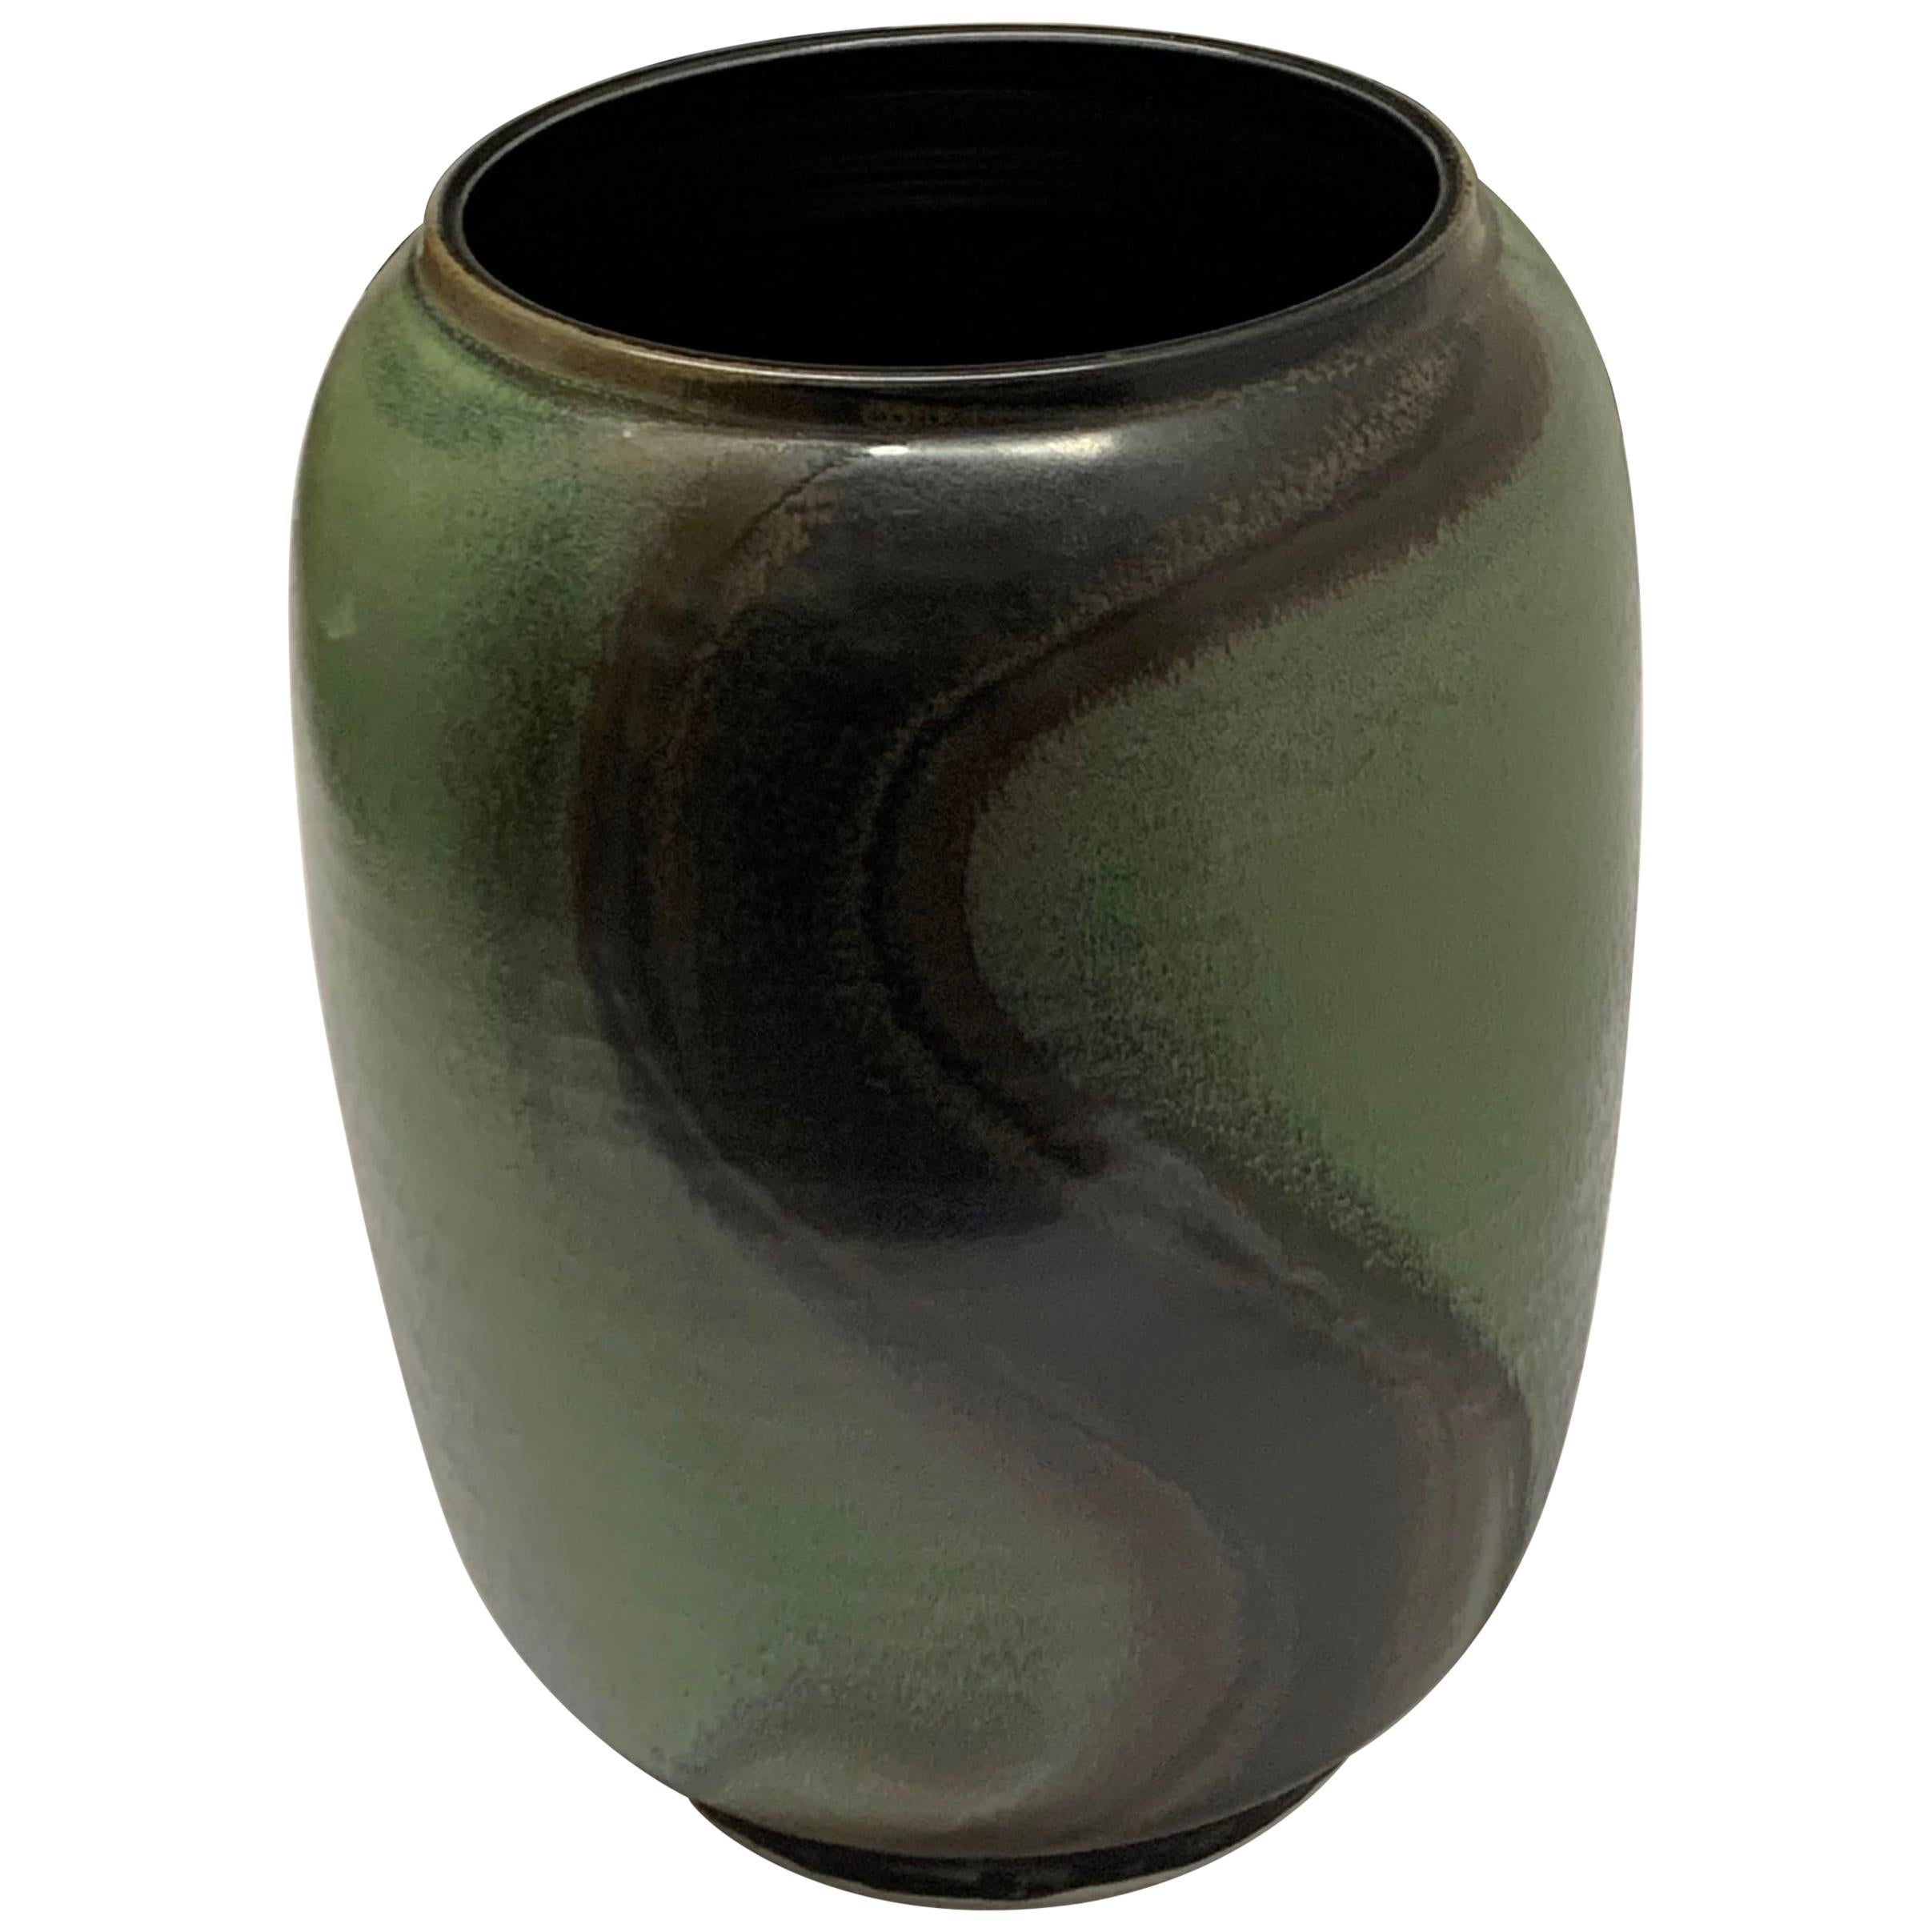 Green and Dark Brown Barrel Shaped Vase, China, Contemporary